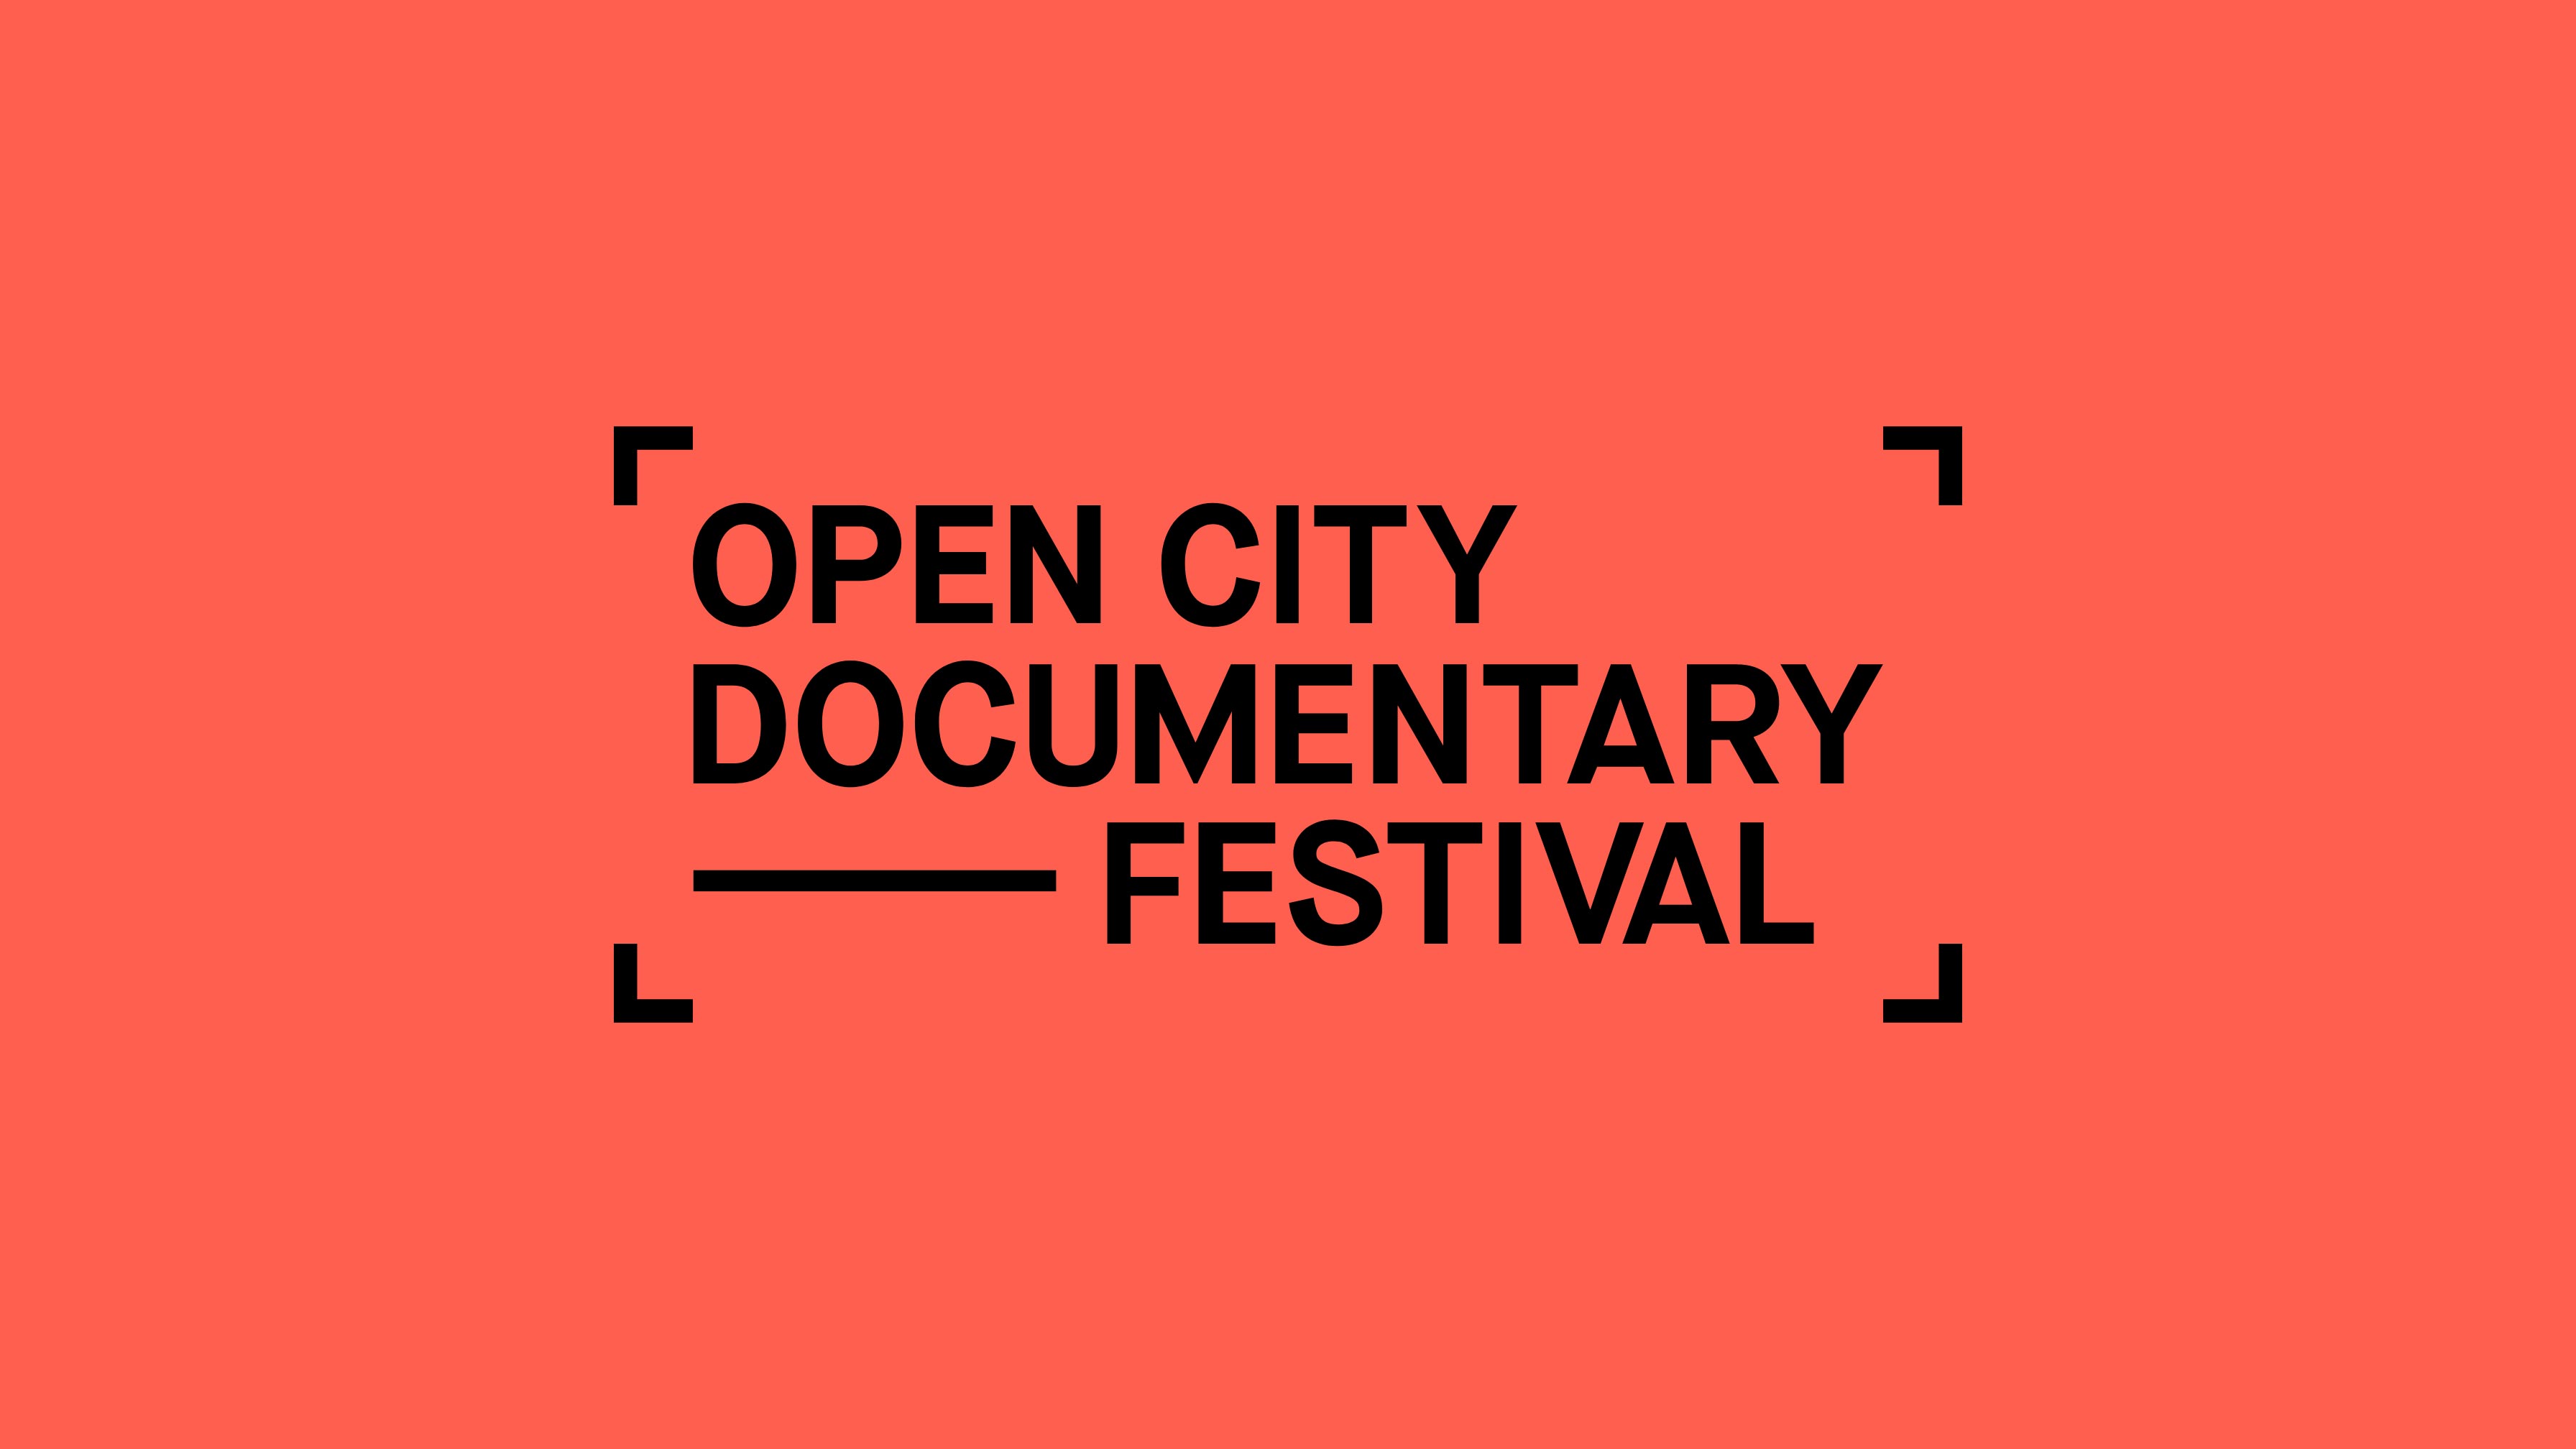 Open City Documentary Festival Identity Design